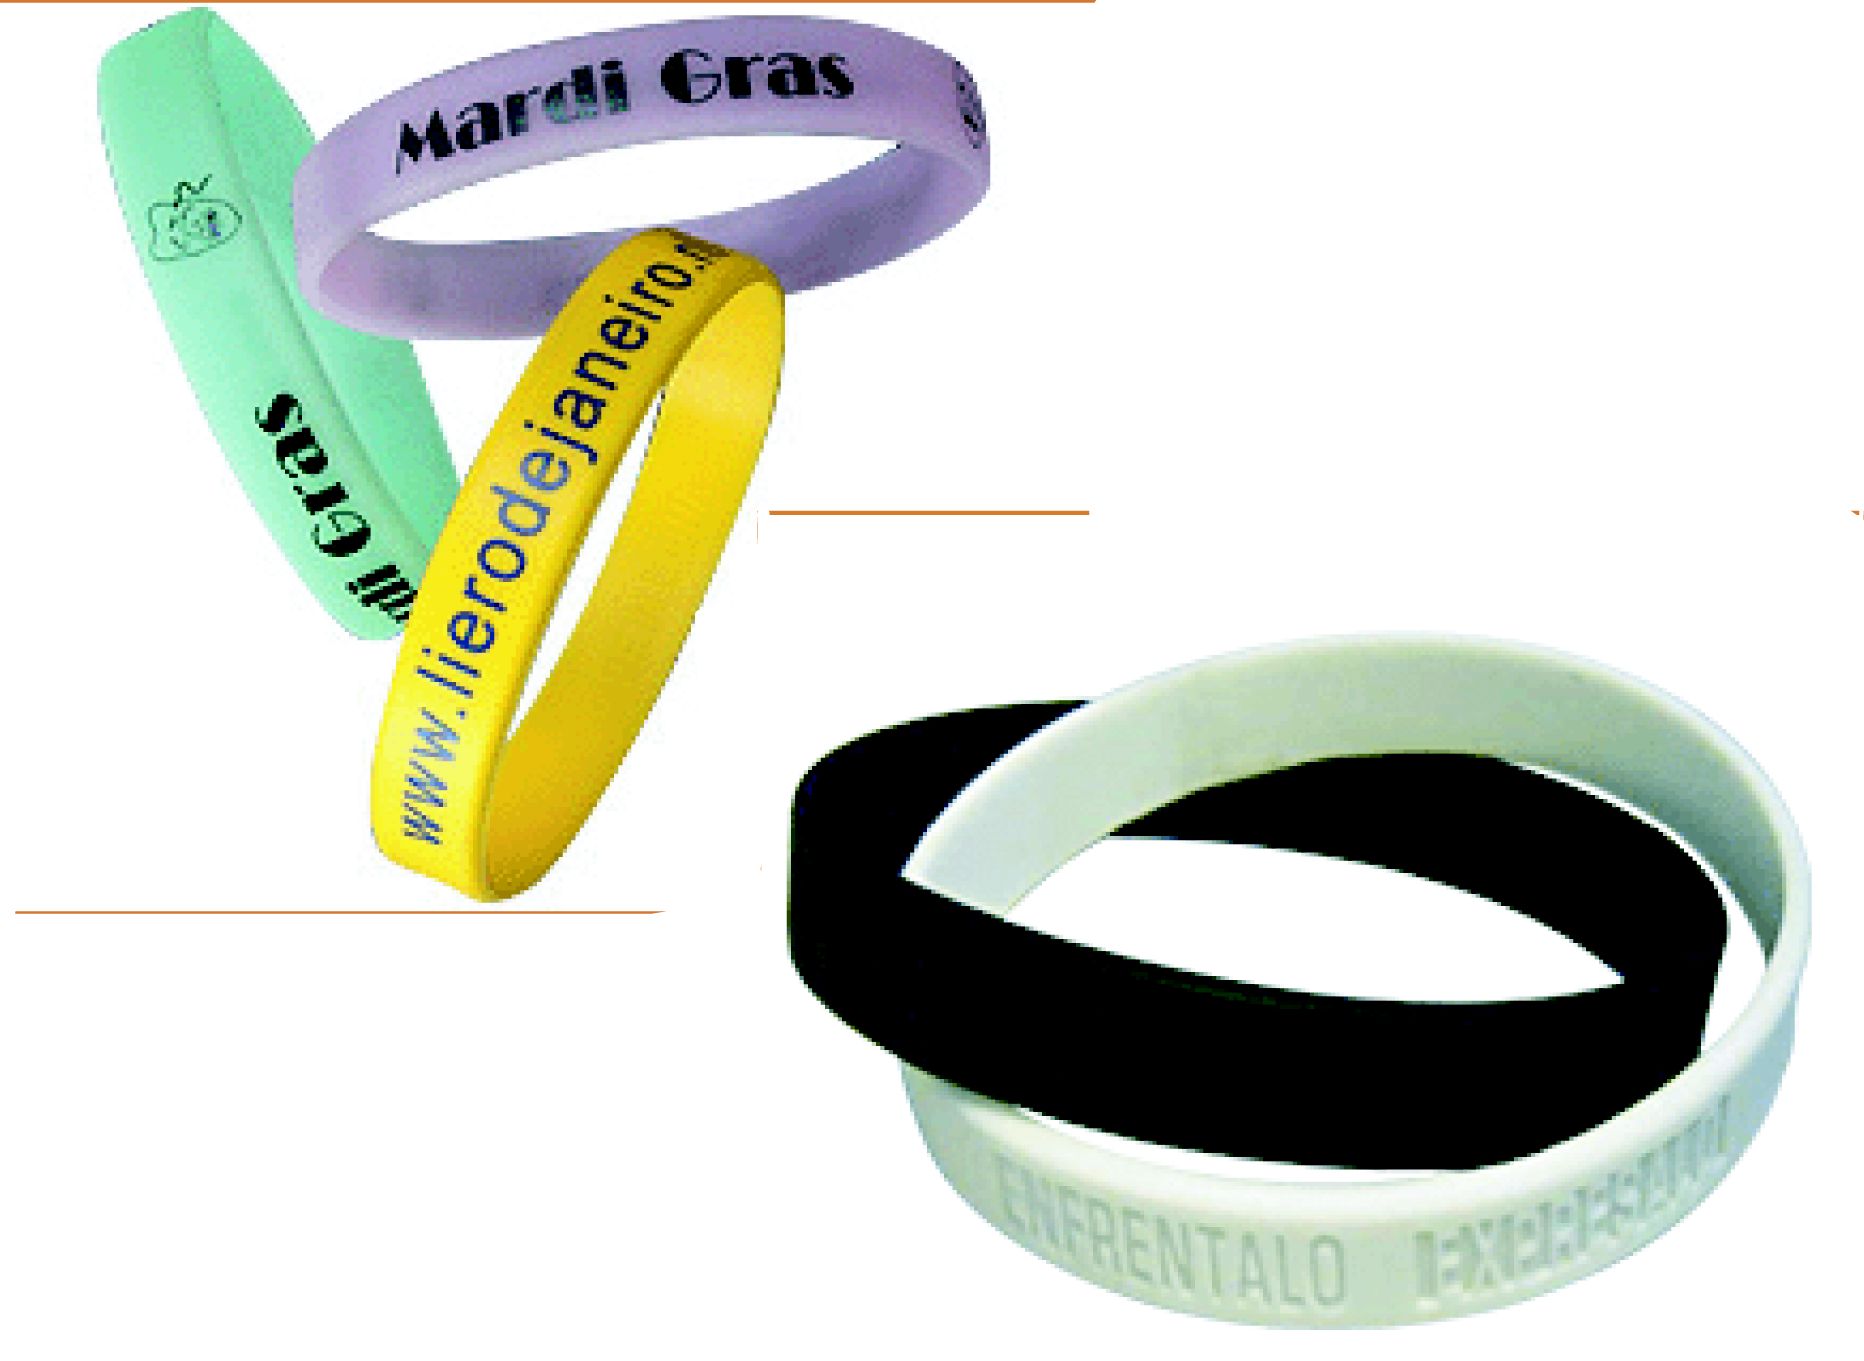 silicon bracelets